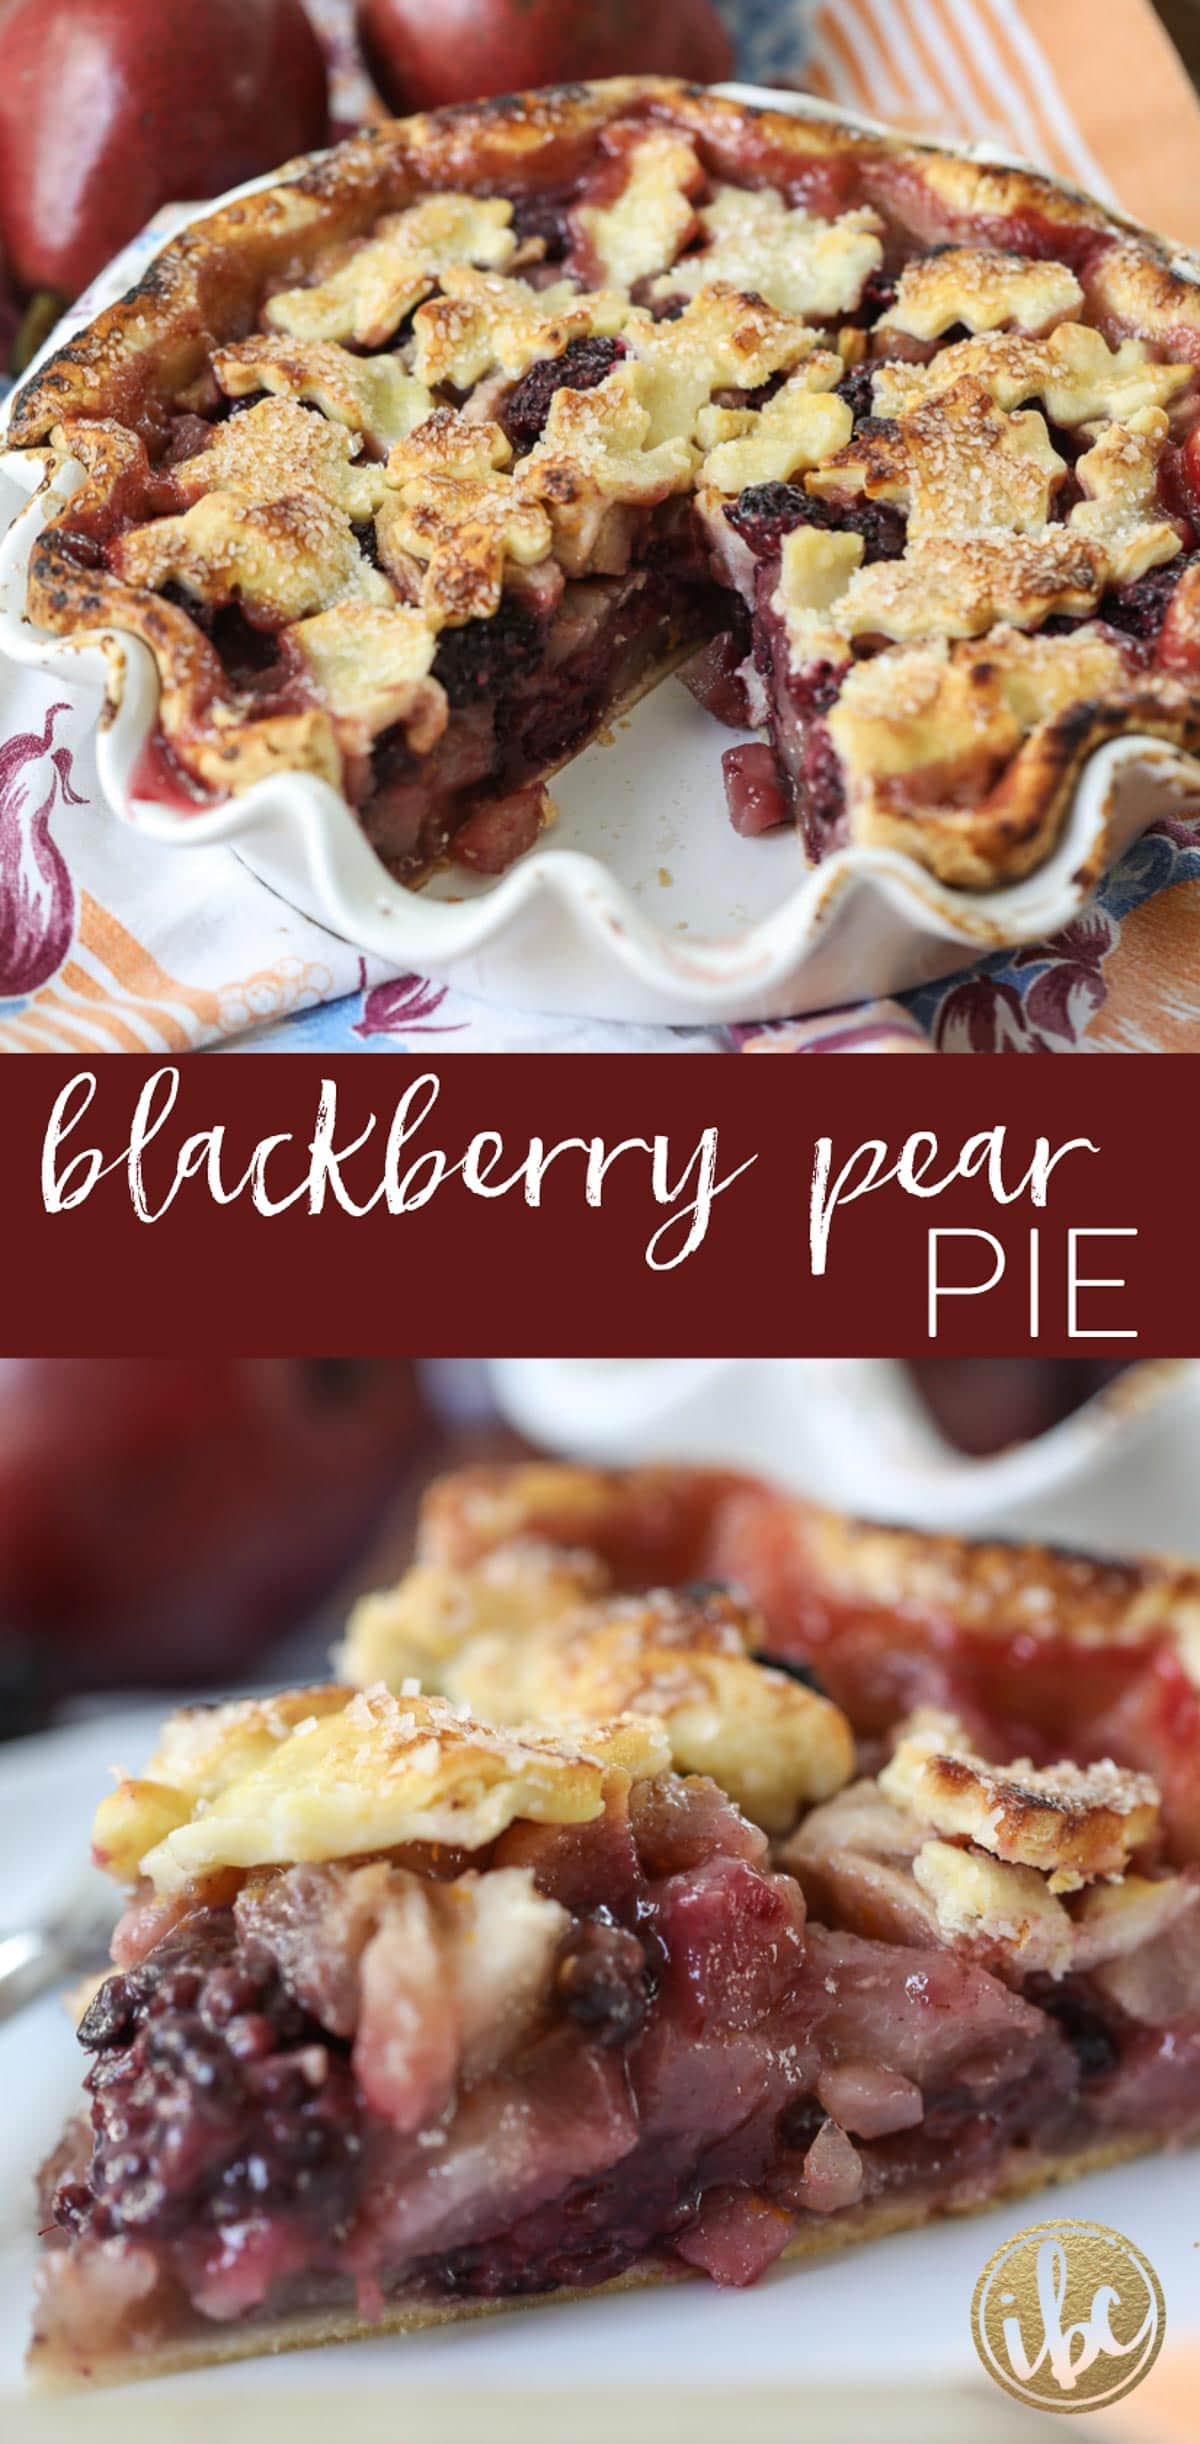 This Blackberry Pear Pie is the perfect summer meets fall dessert recipe. #blackberry #pie #pie #dessert #fallbaking #recipe